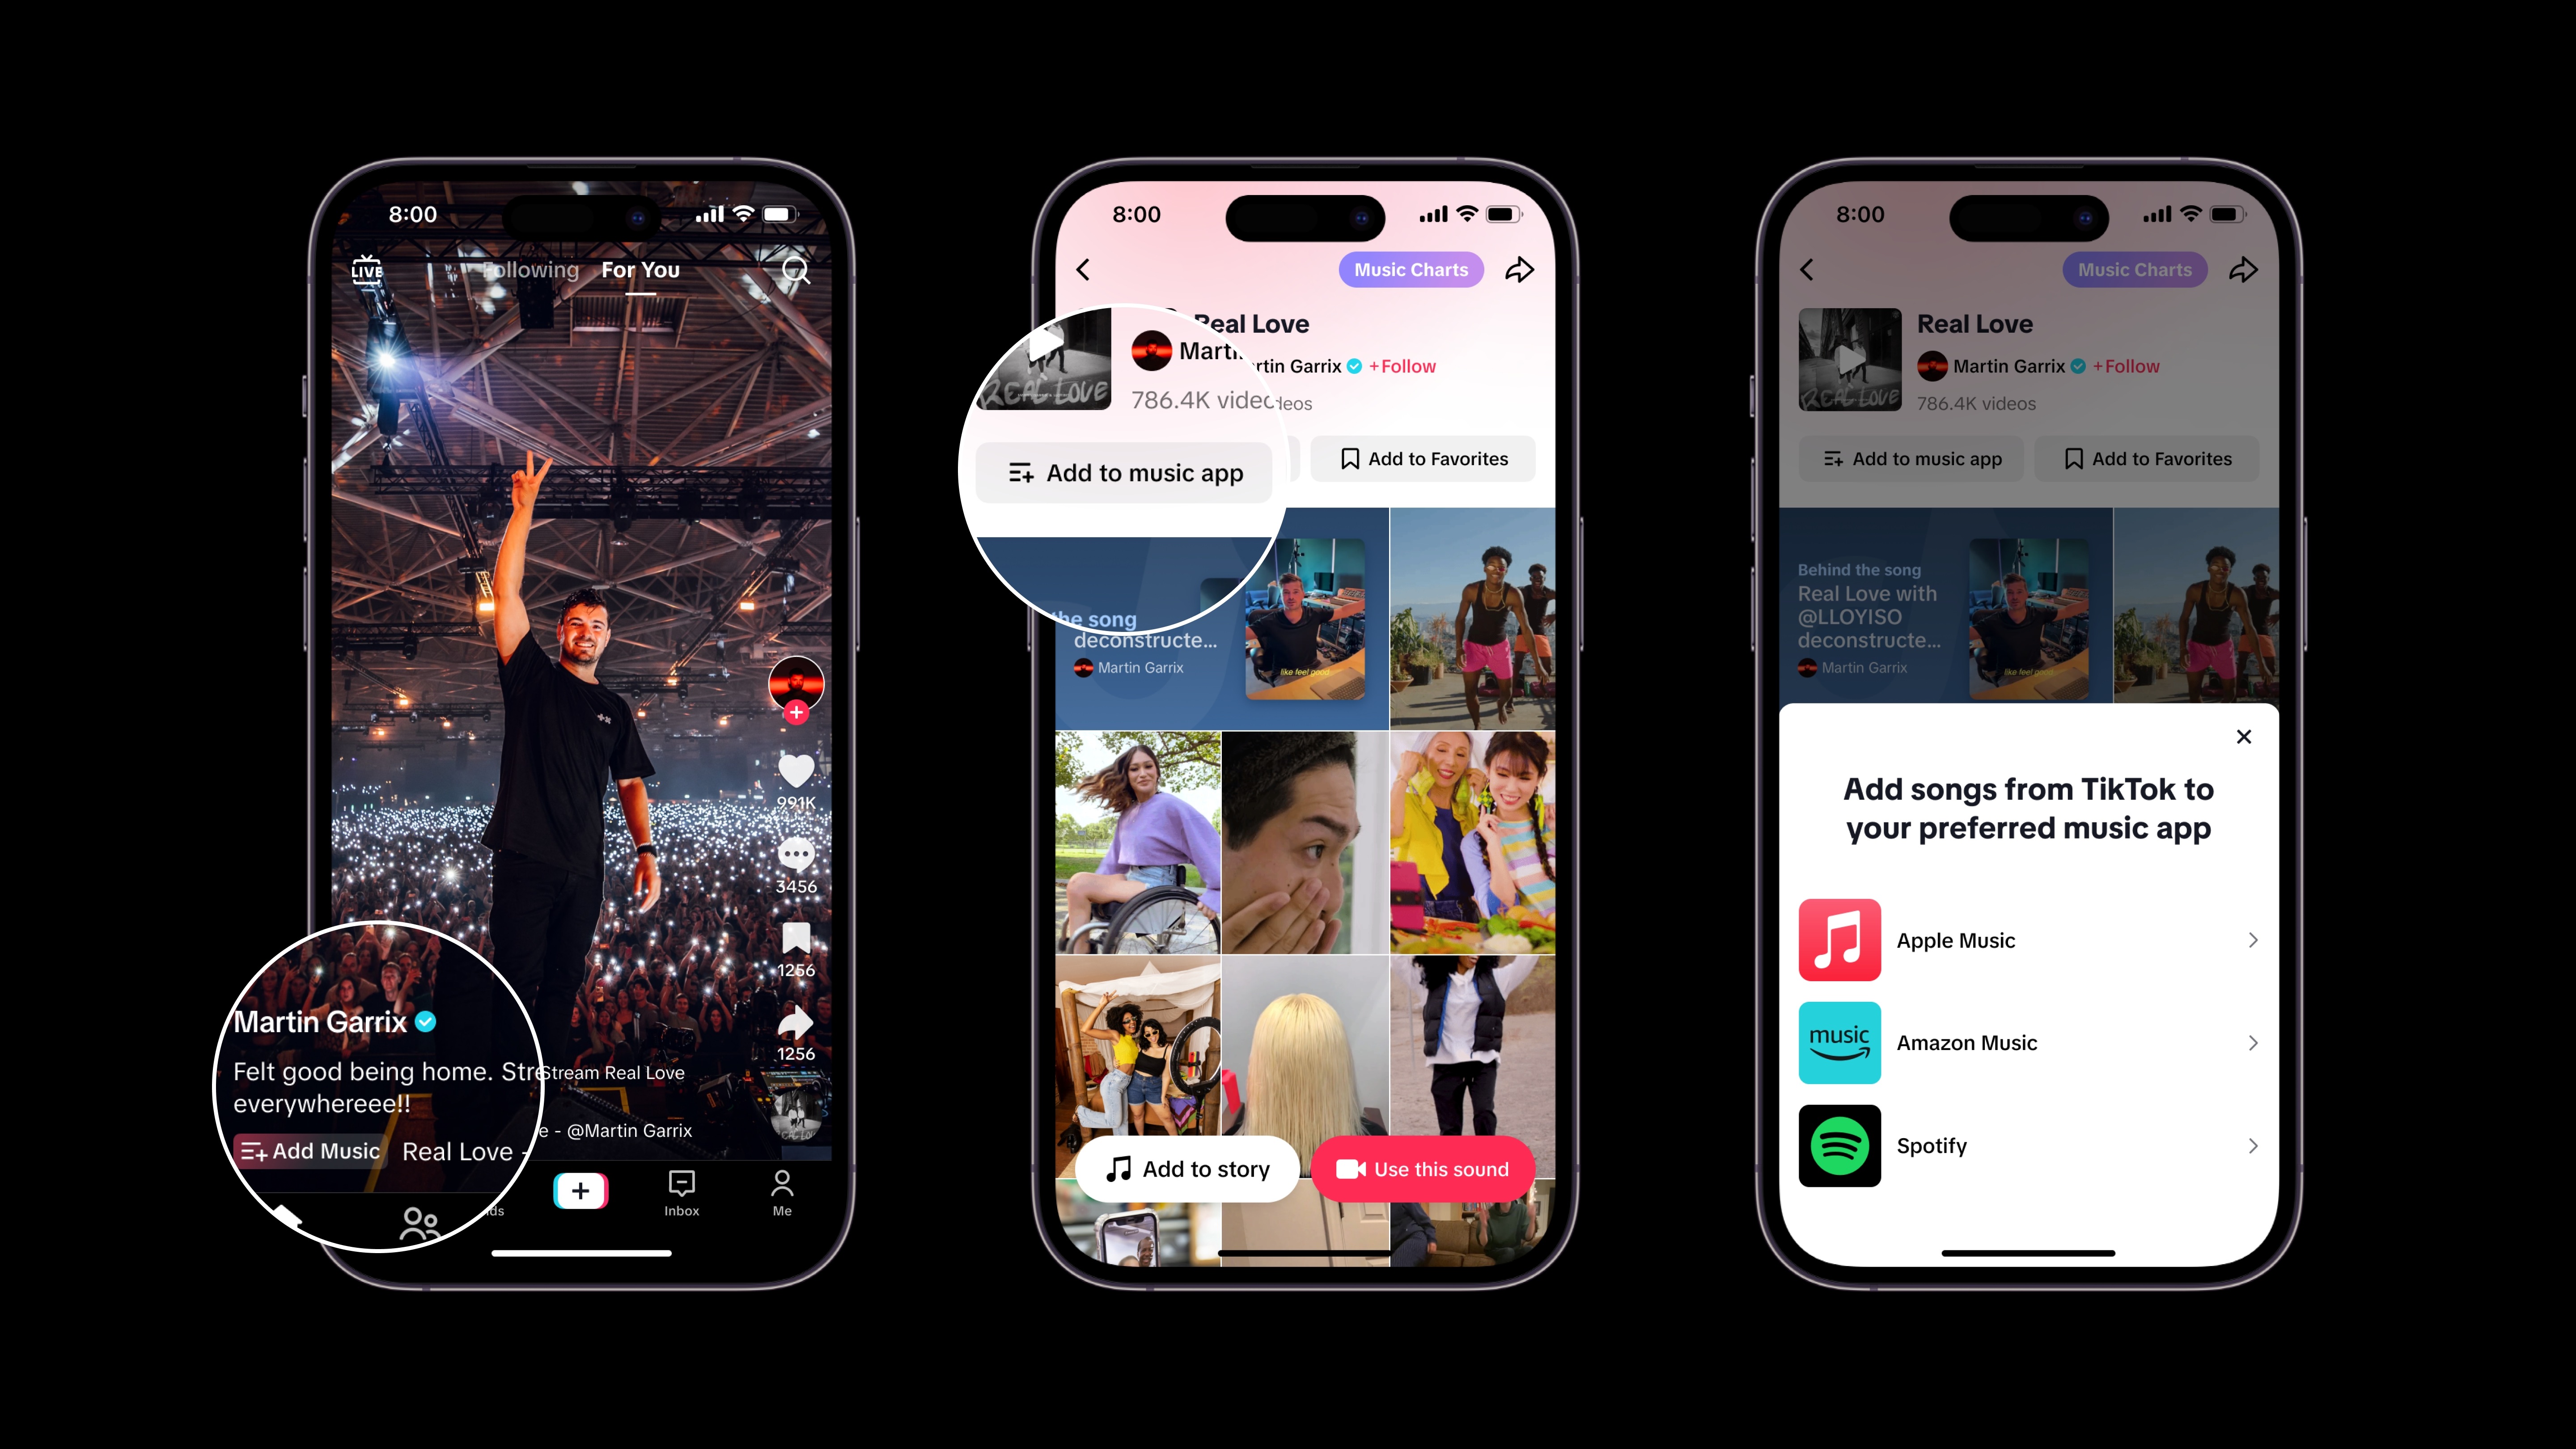 TikTok's iPhone app showcasing the Add to Music App button